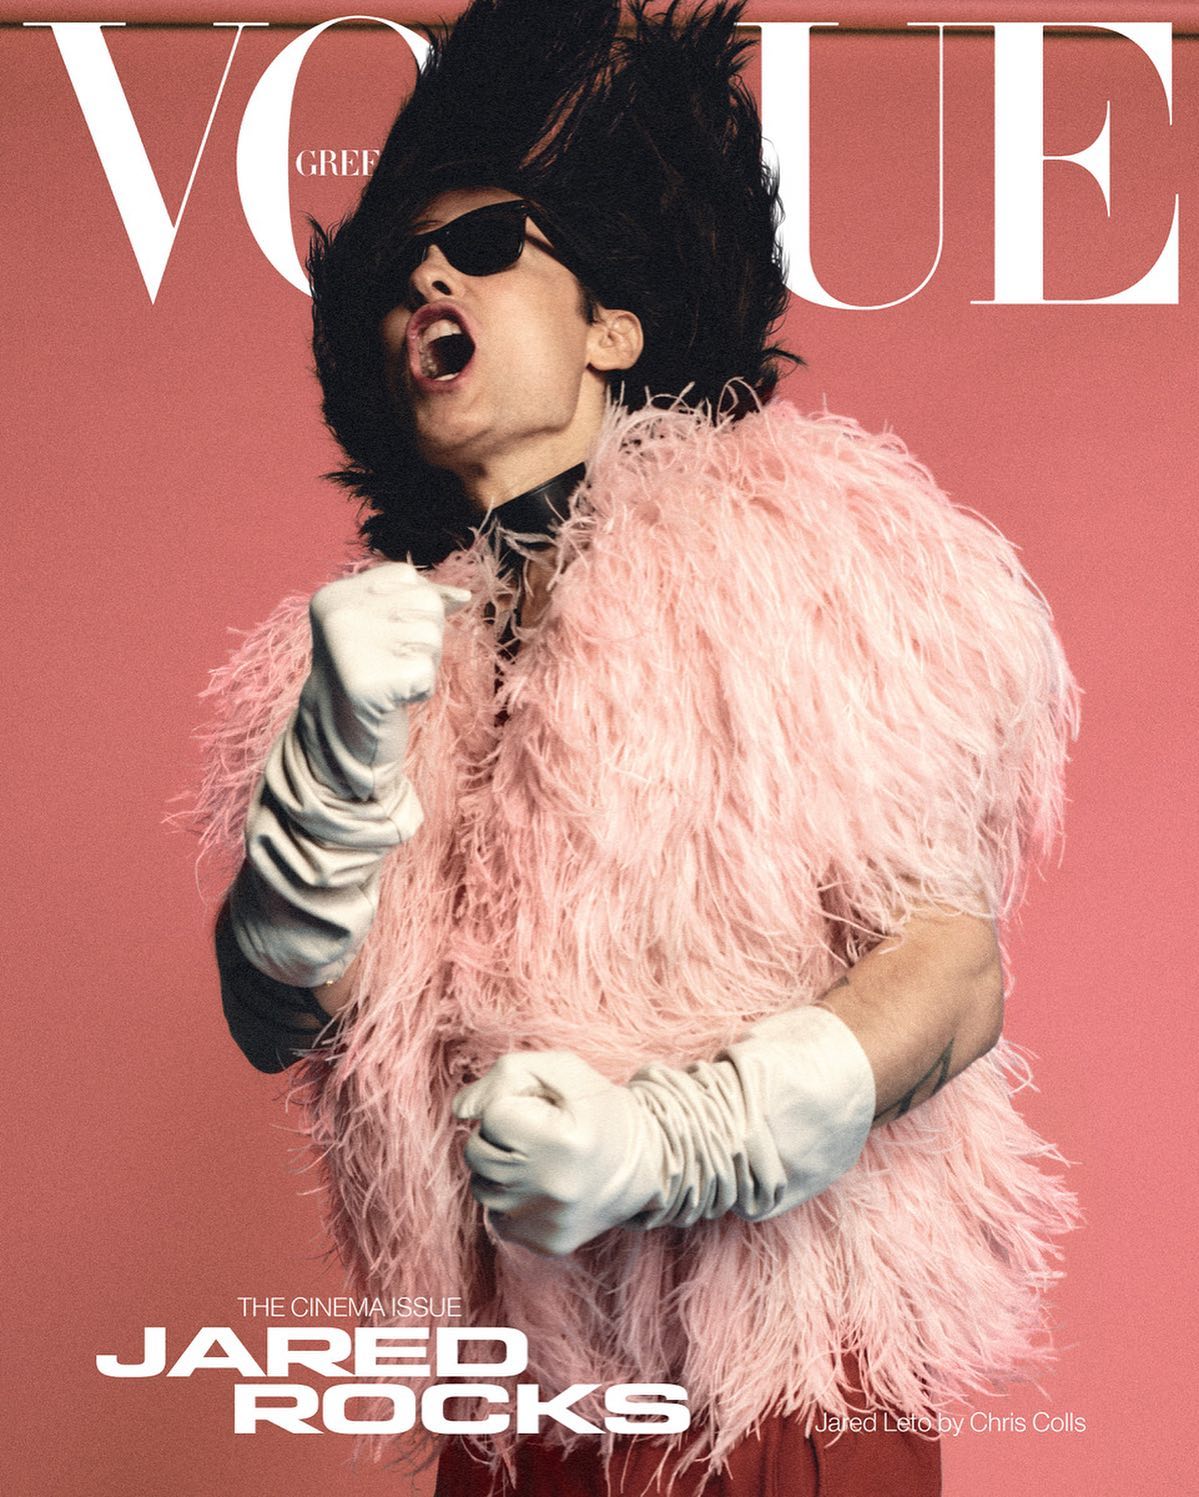 Michael Philouze | Vogue International | Photographed by Chris Colls
| 10